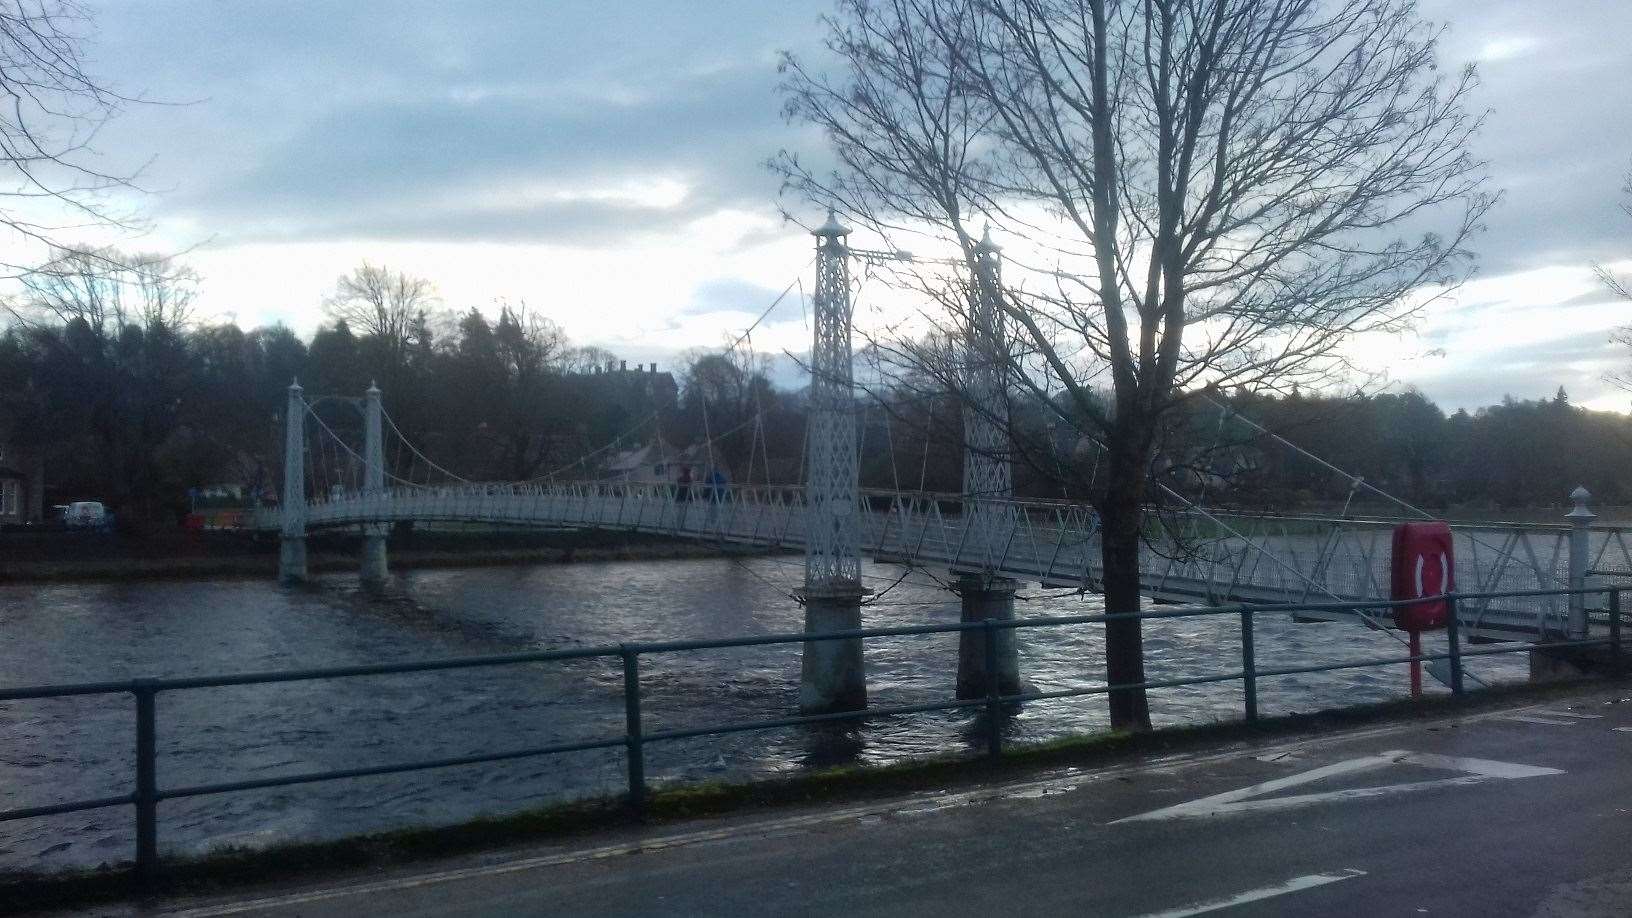 Inverness' popular Infirmary Bridge